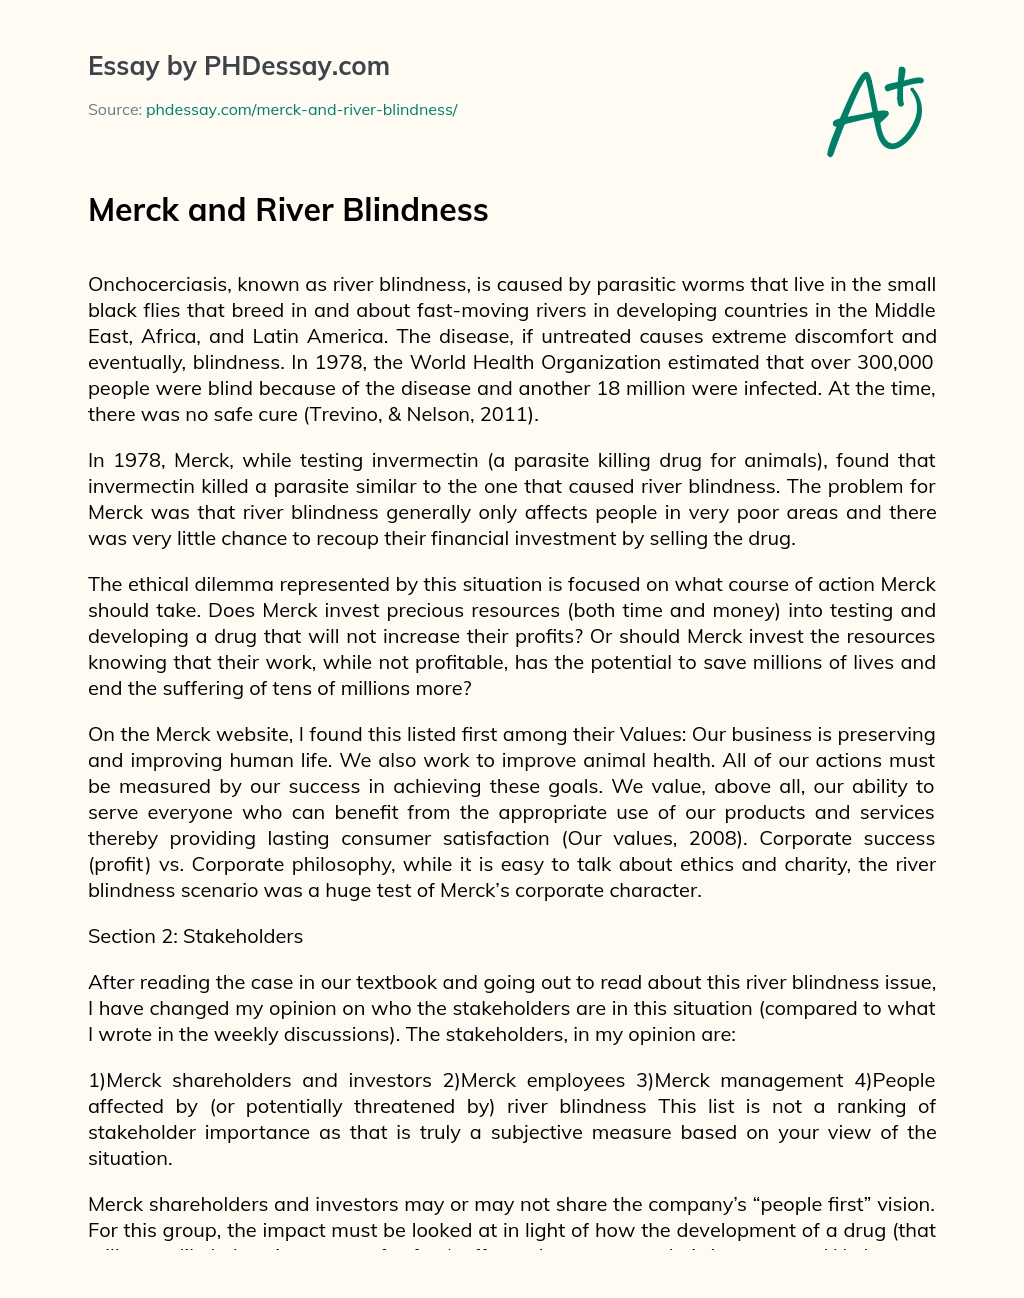 Merck and River Blindness essay